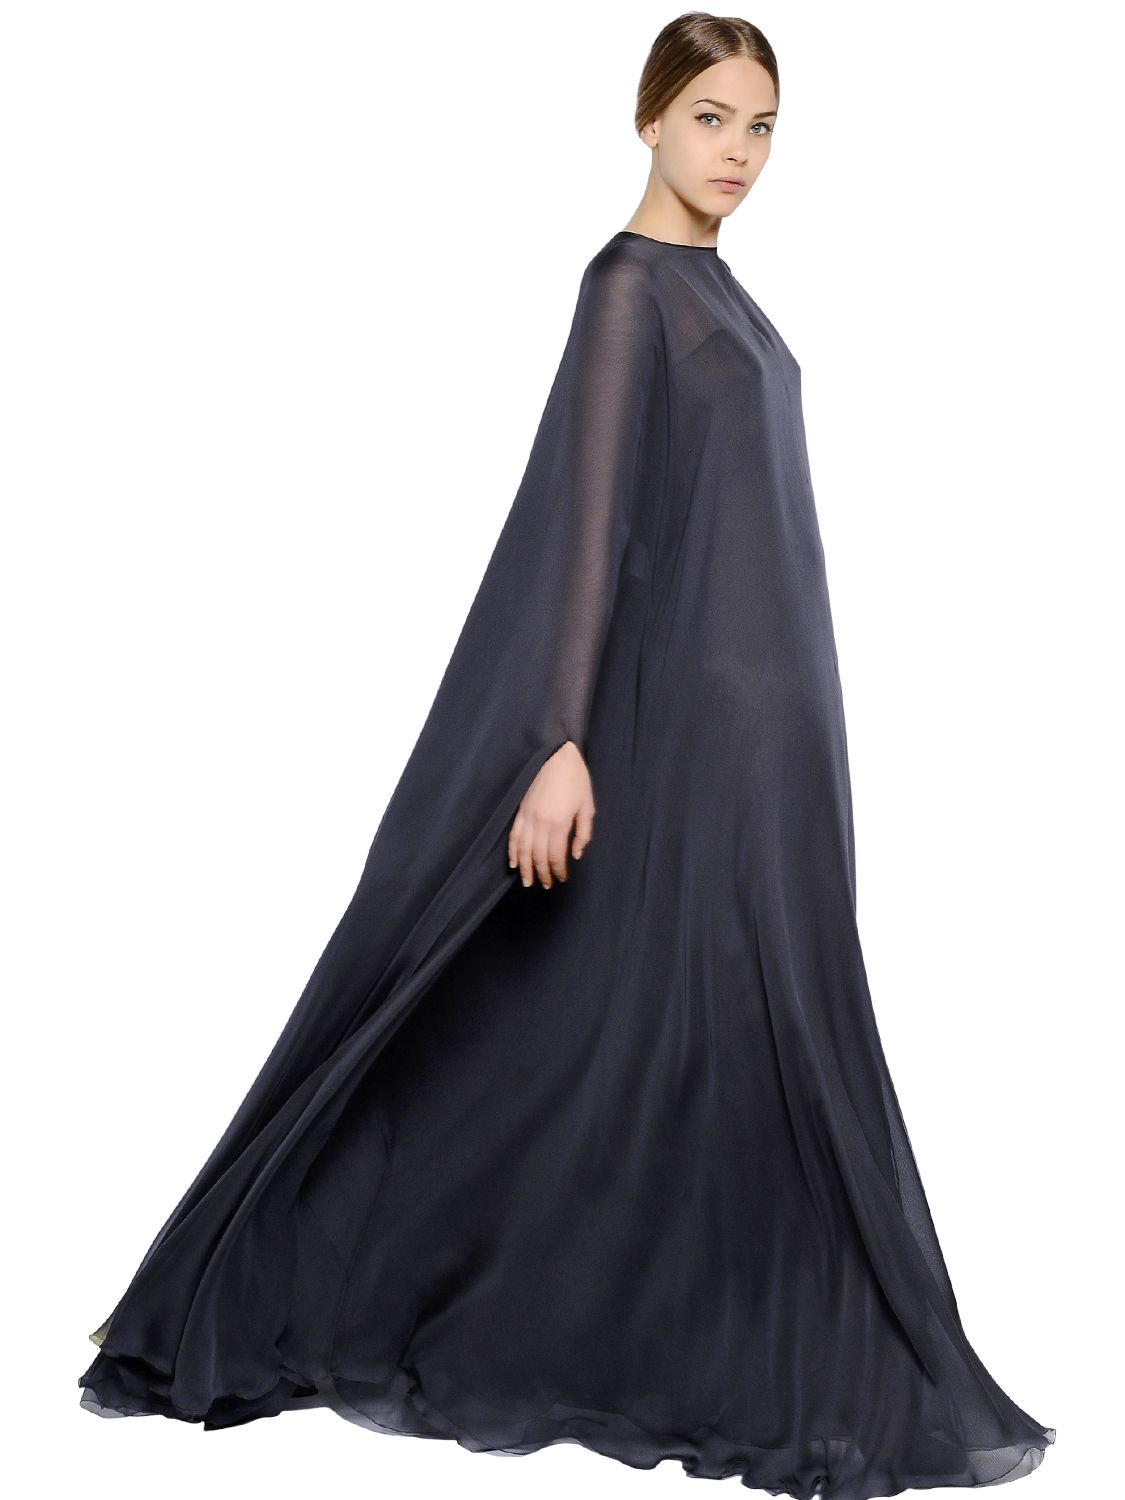 Lyst - Valentino Silk Chiffon Cape Dress in Gray